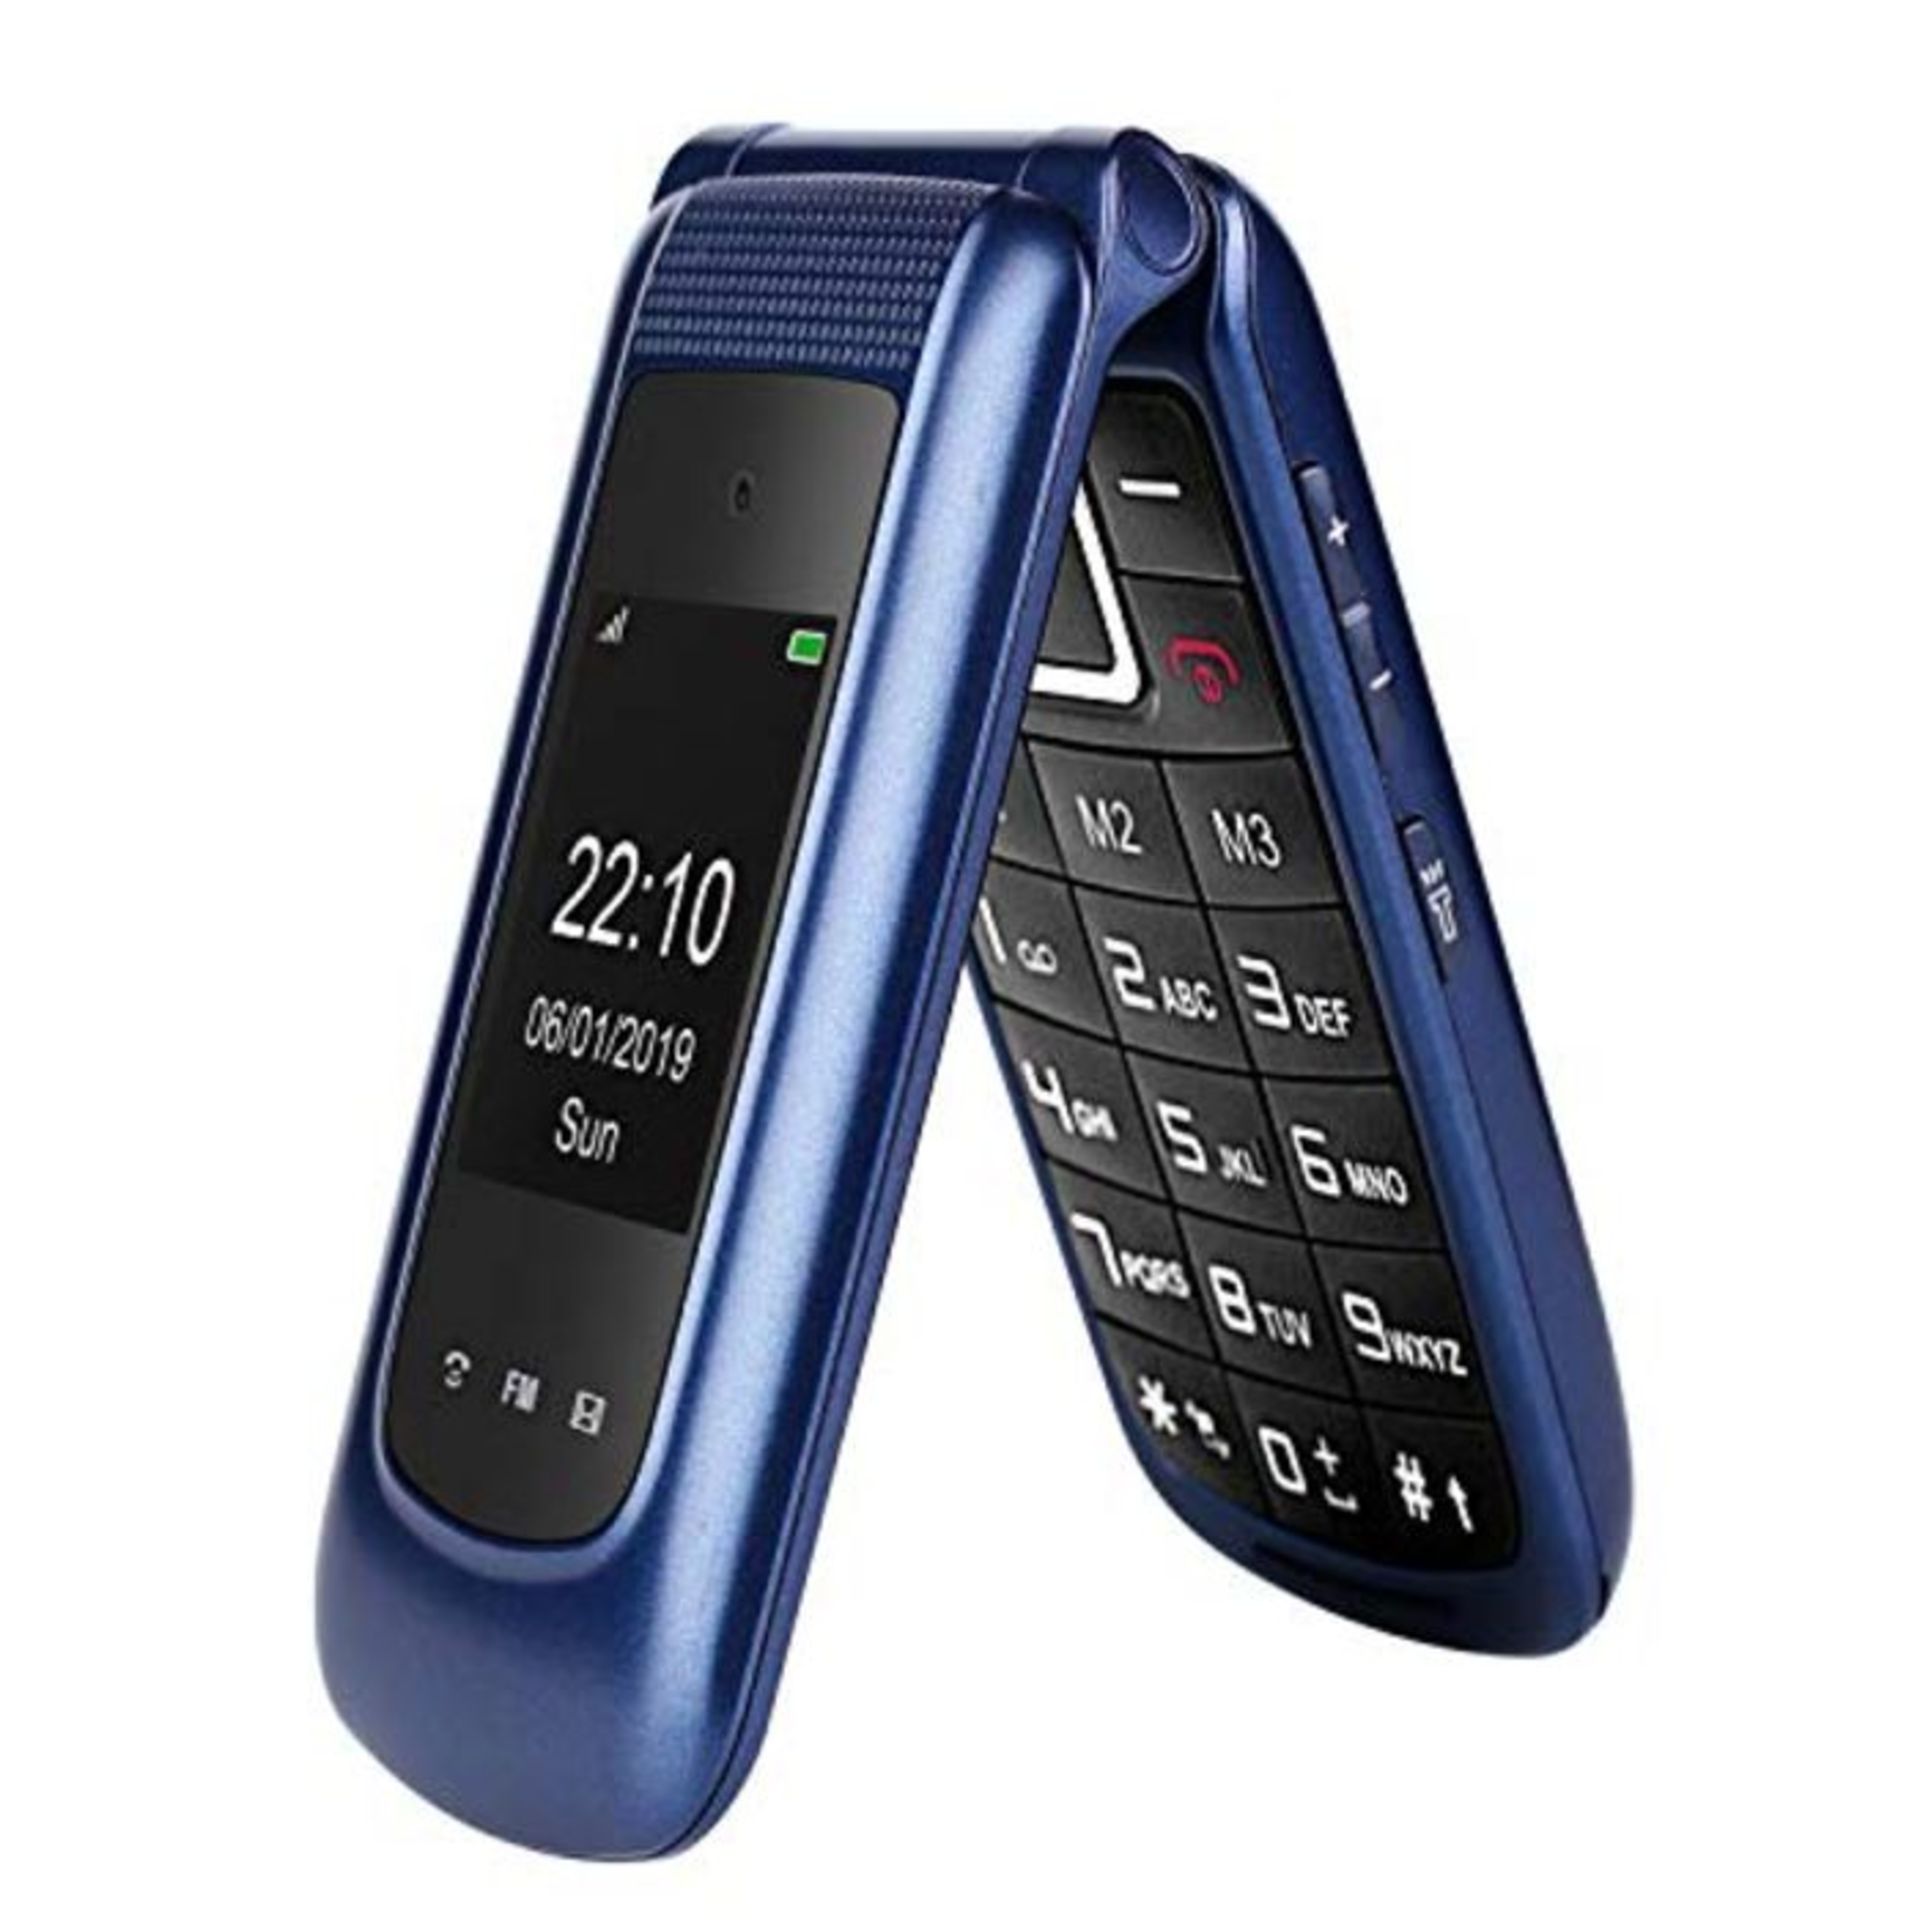 Uleway Big Button Mobile Phone for Elderly Sim Free Flip Phone Unlocked GSM Basic Mobi